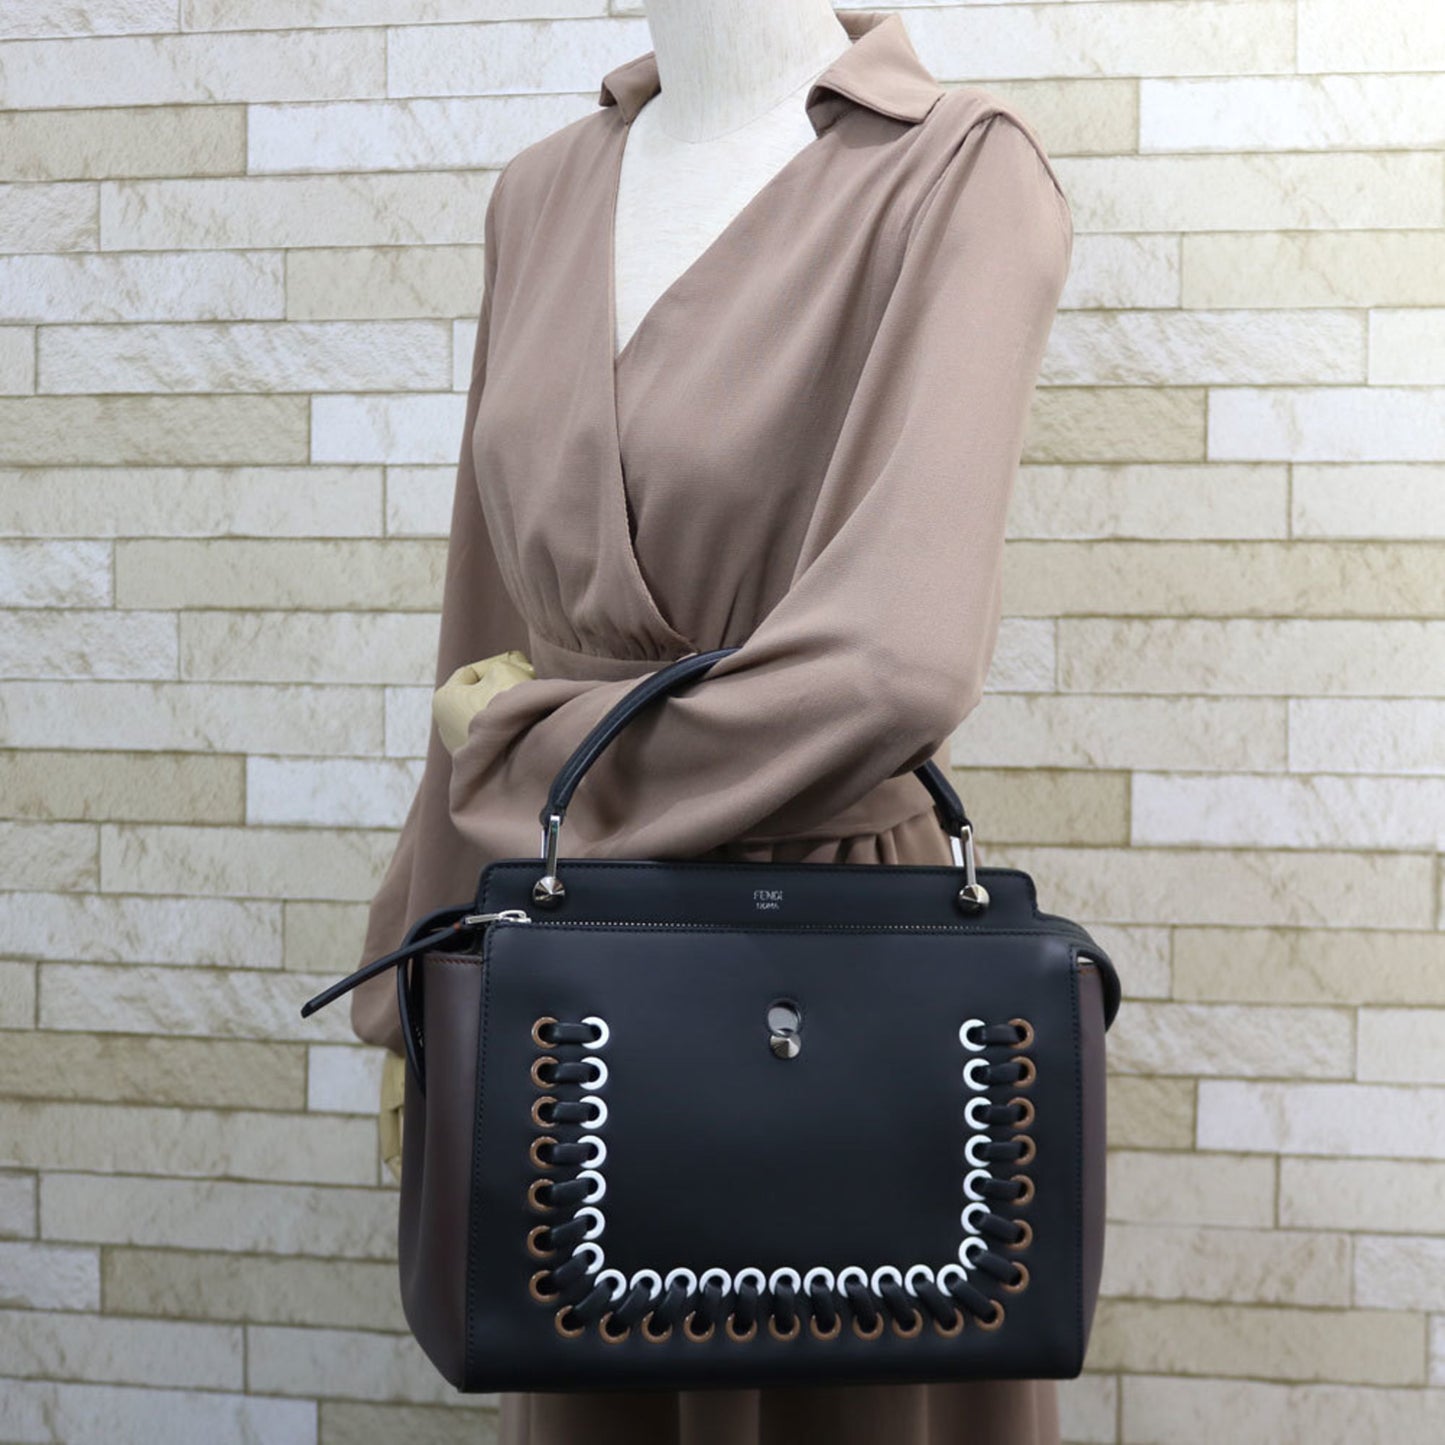 Fendi Women's Black Leather Dot Com Handbag by Fendi in Black